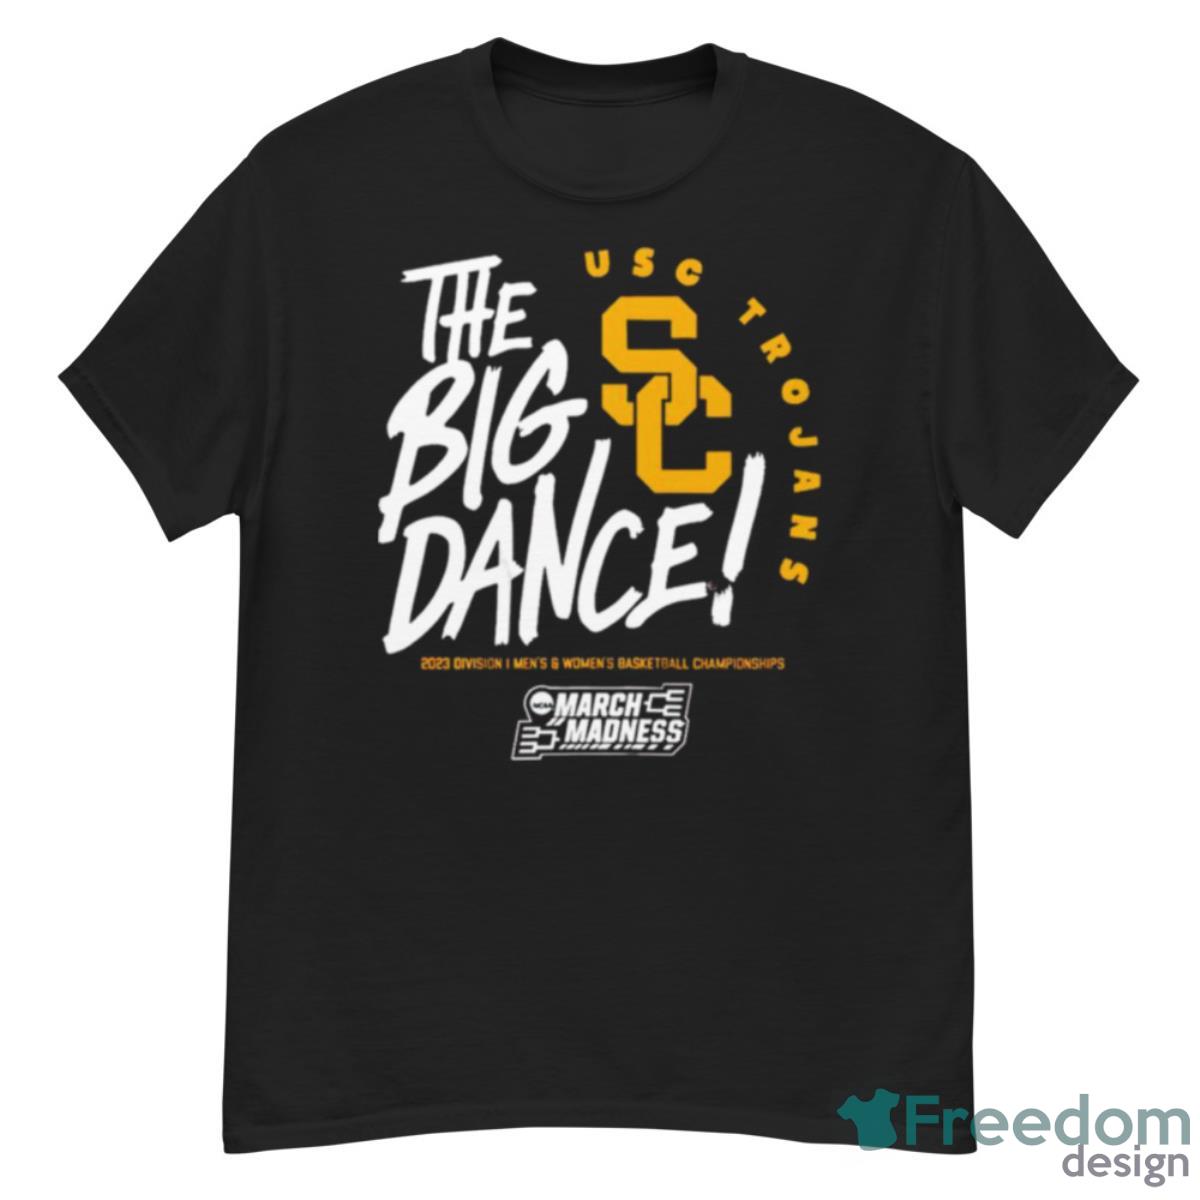 USC Trojans the big dance March Madness 2023 Division men’s and women’s basketball championship shirt - G500 Men’s Classic T-Shirt